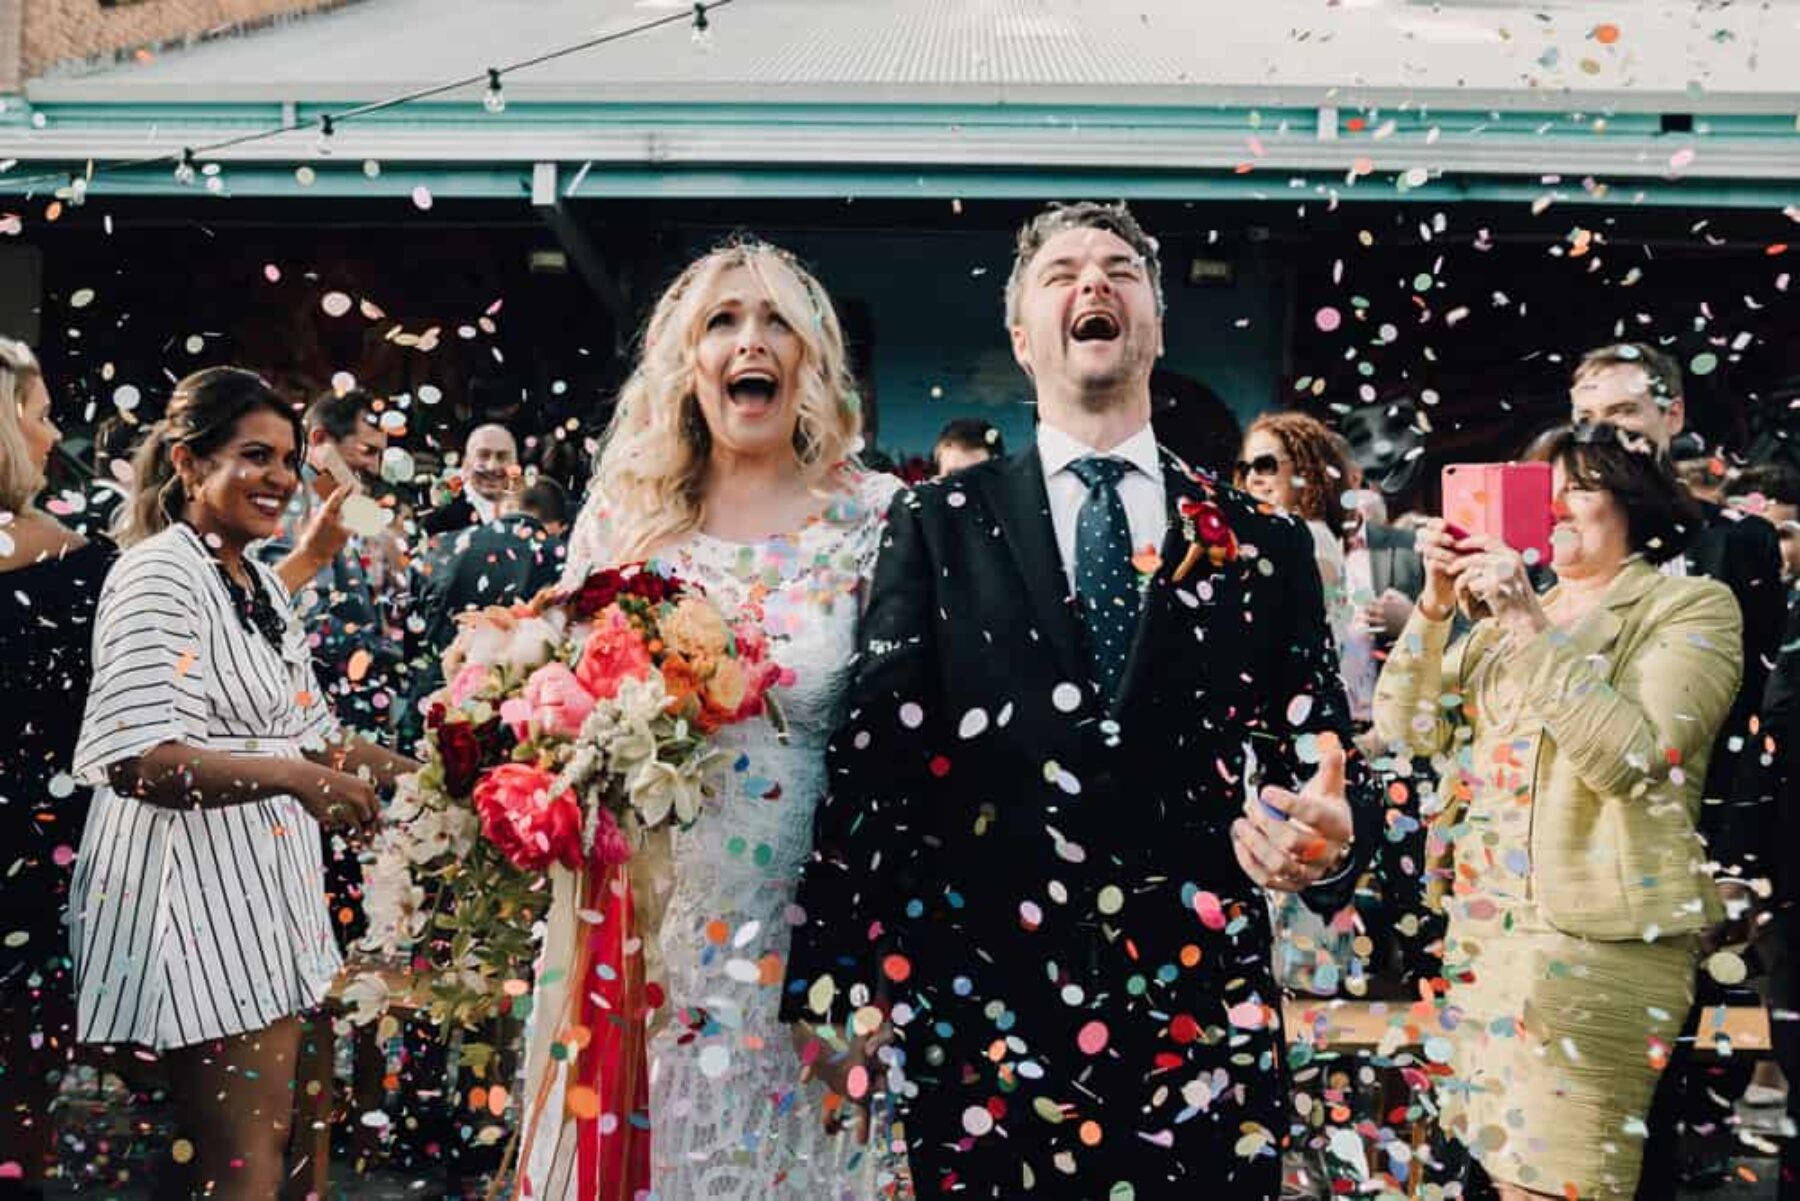 Colourful wedding confetti toss